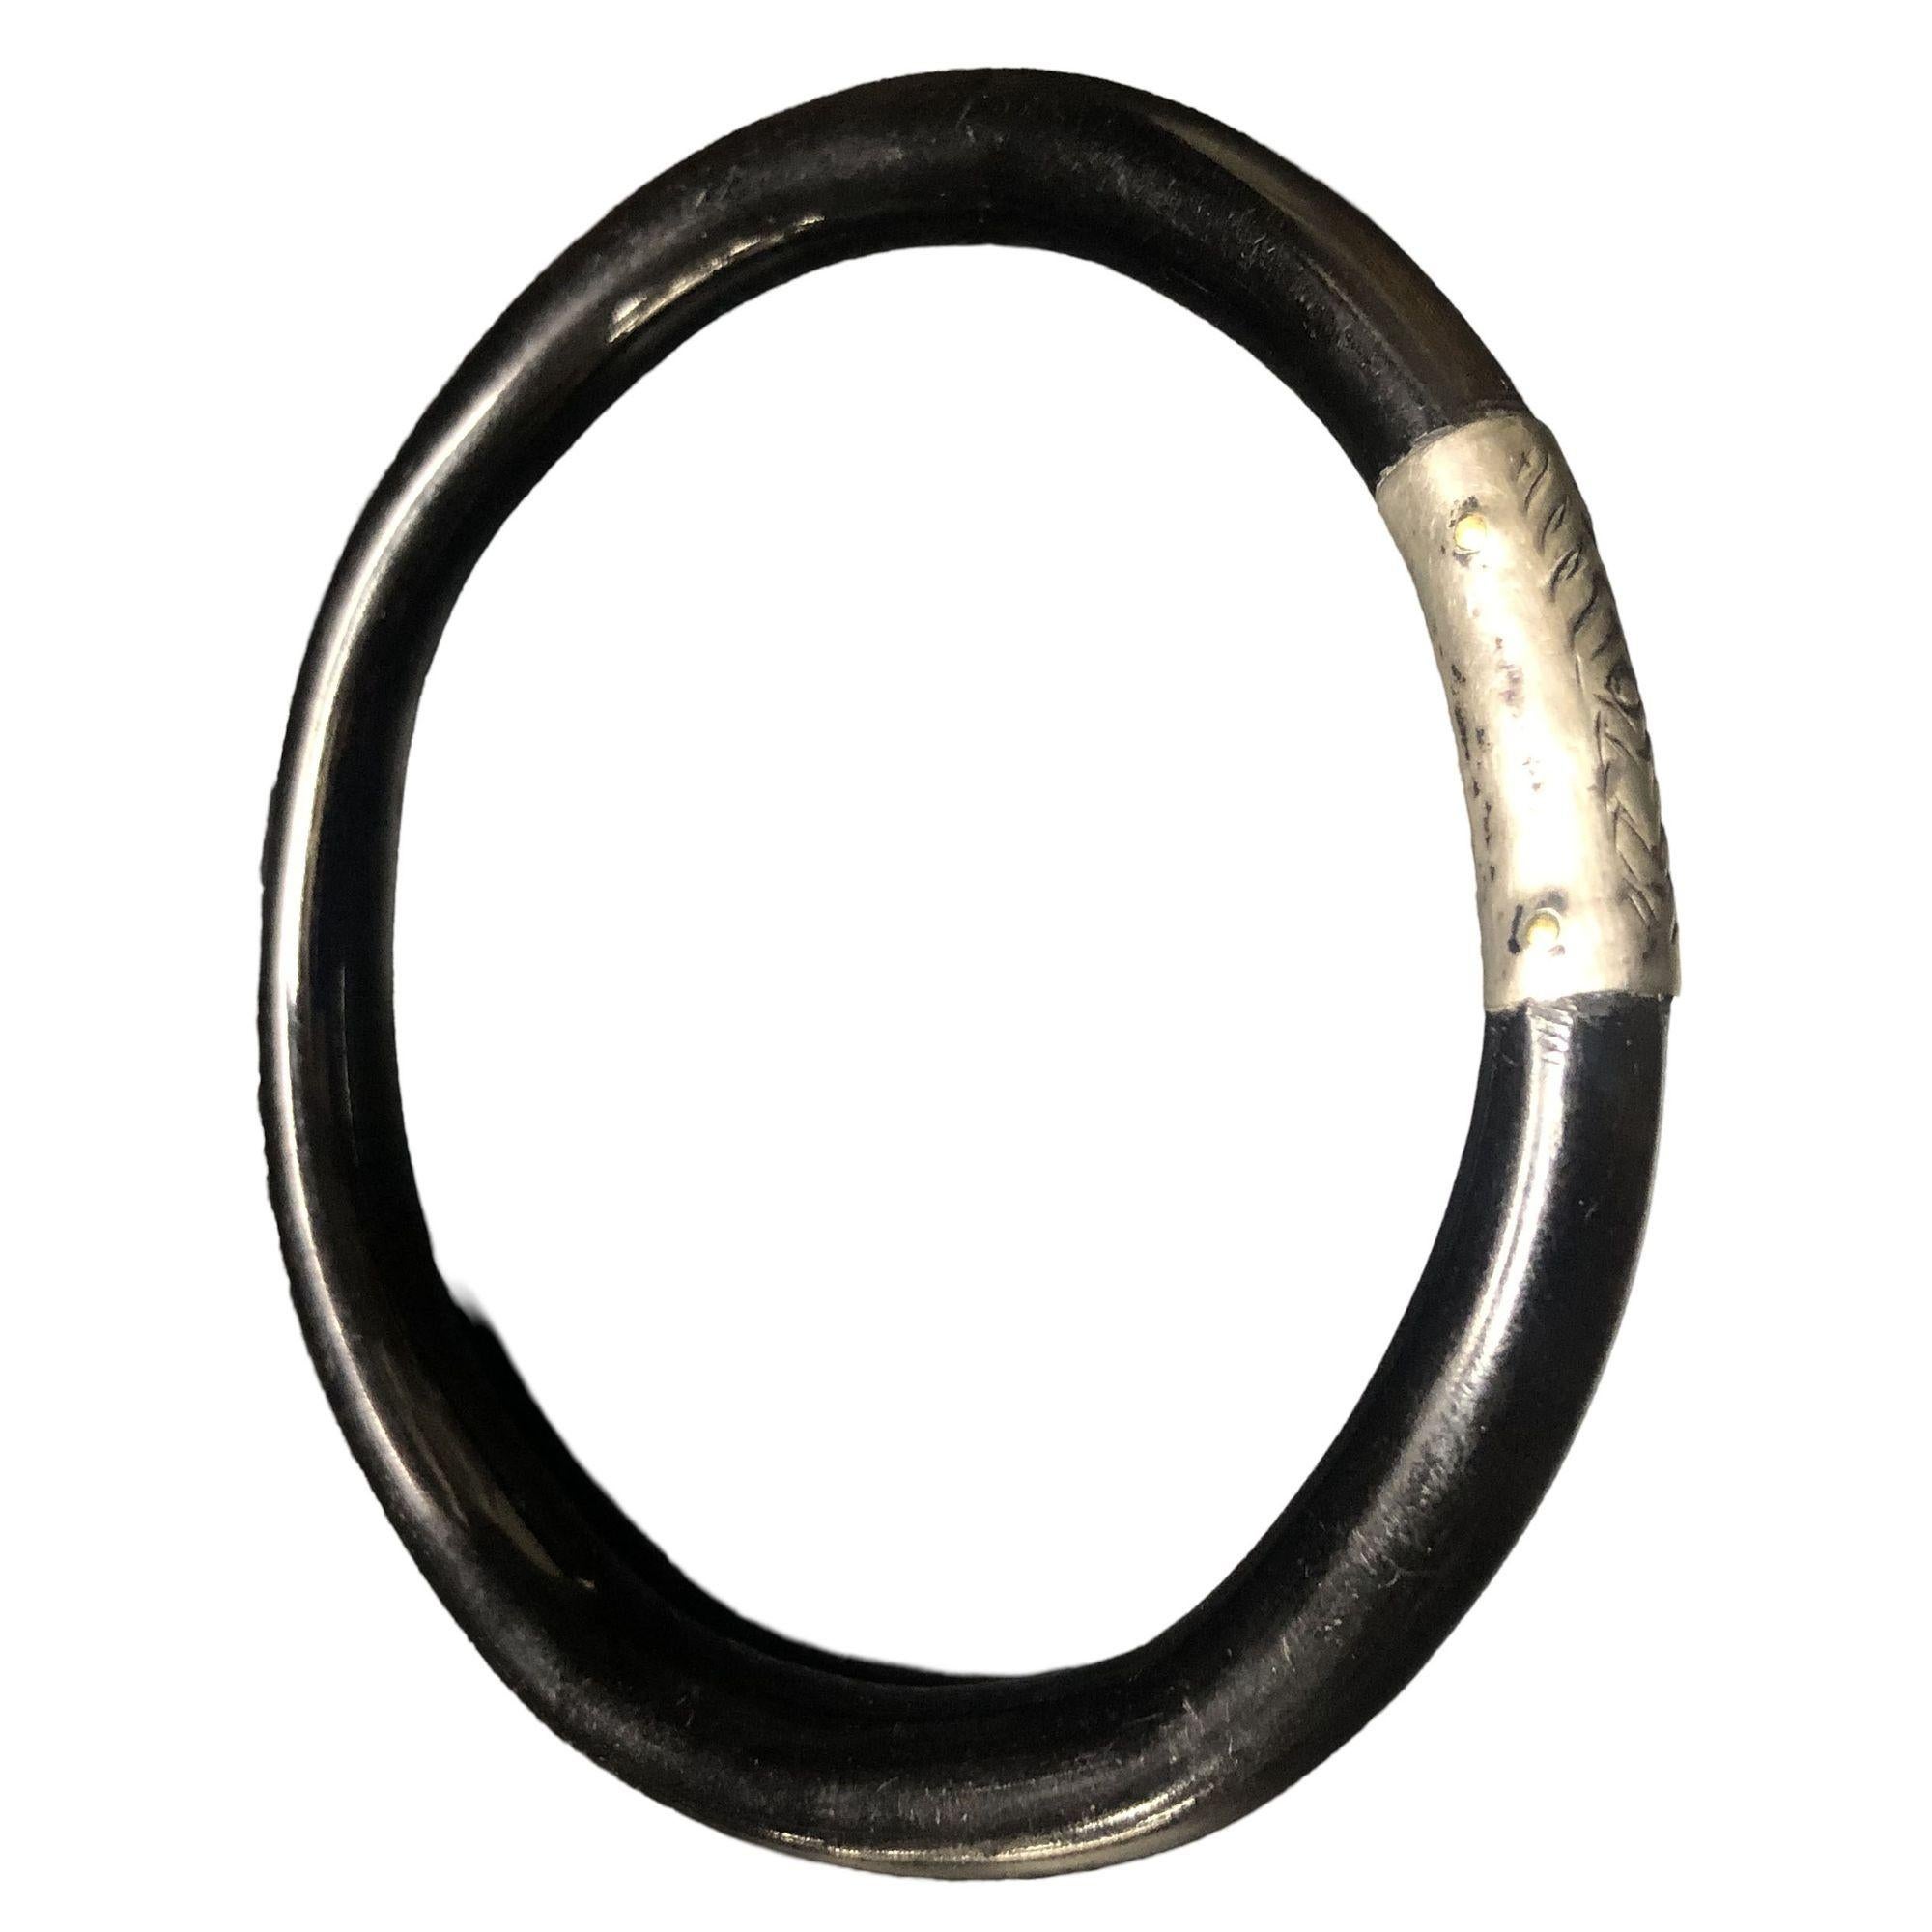 Black Bakelite bangle bracelet with sterling silver band adornment.

Measures: 2 3/8